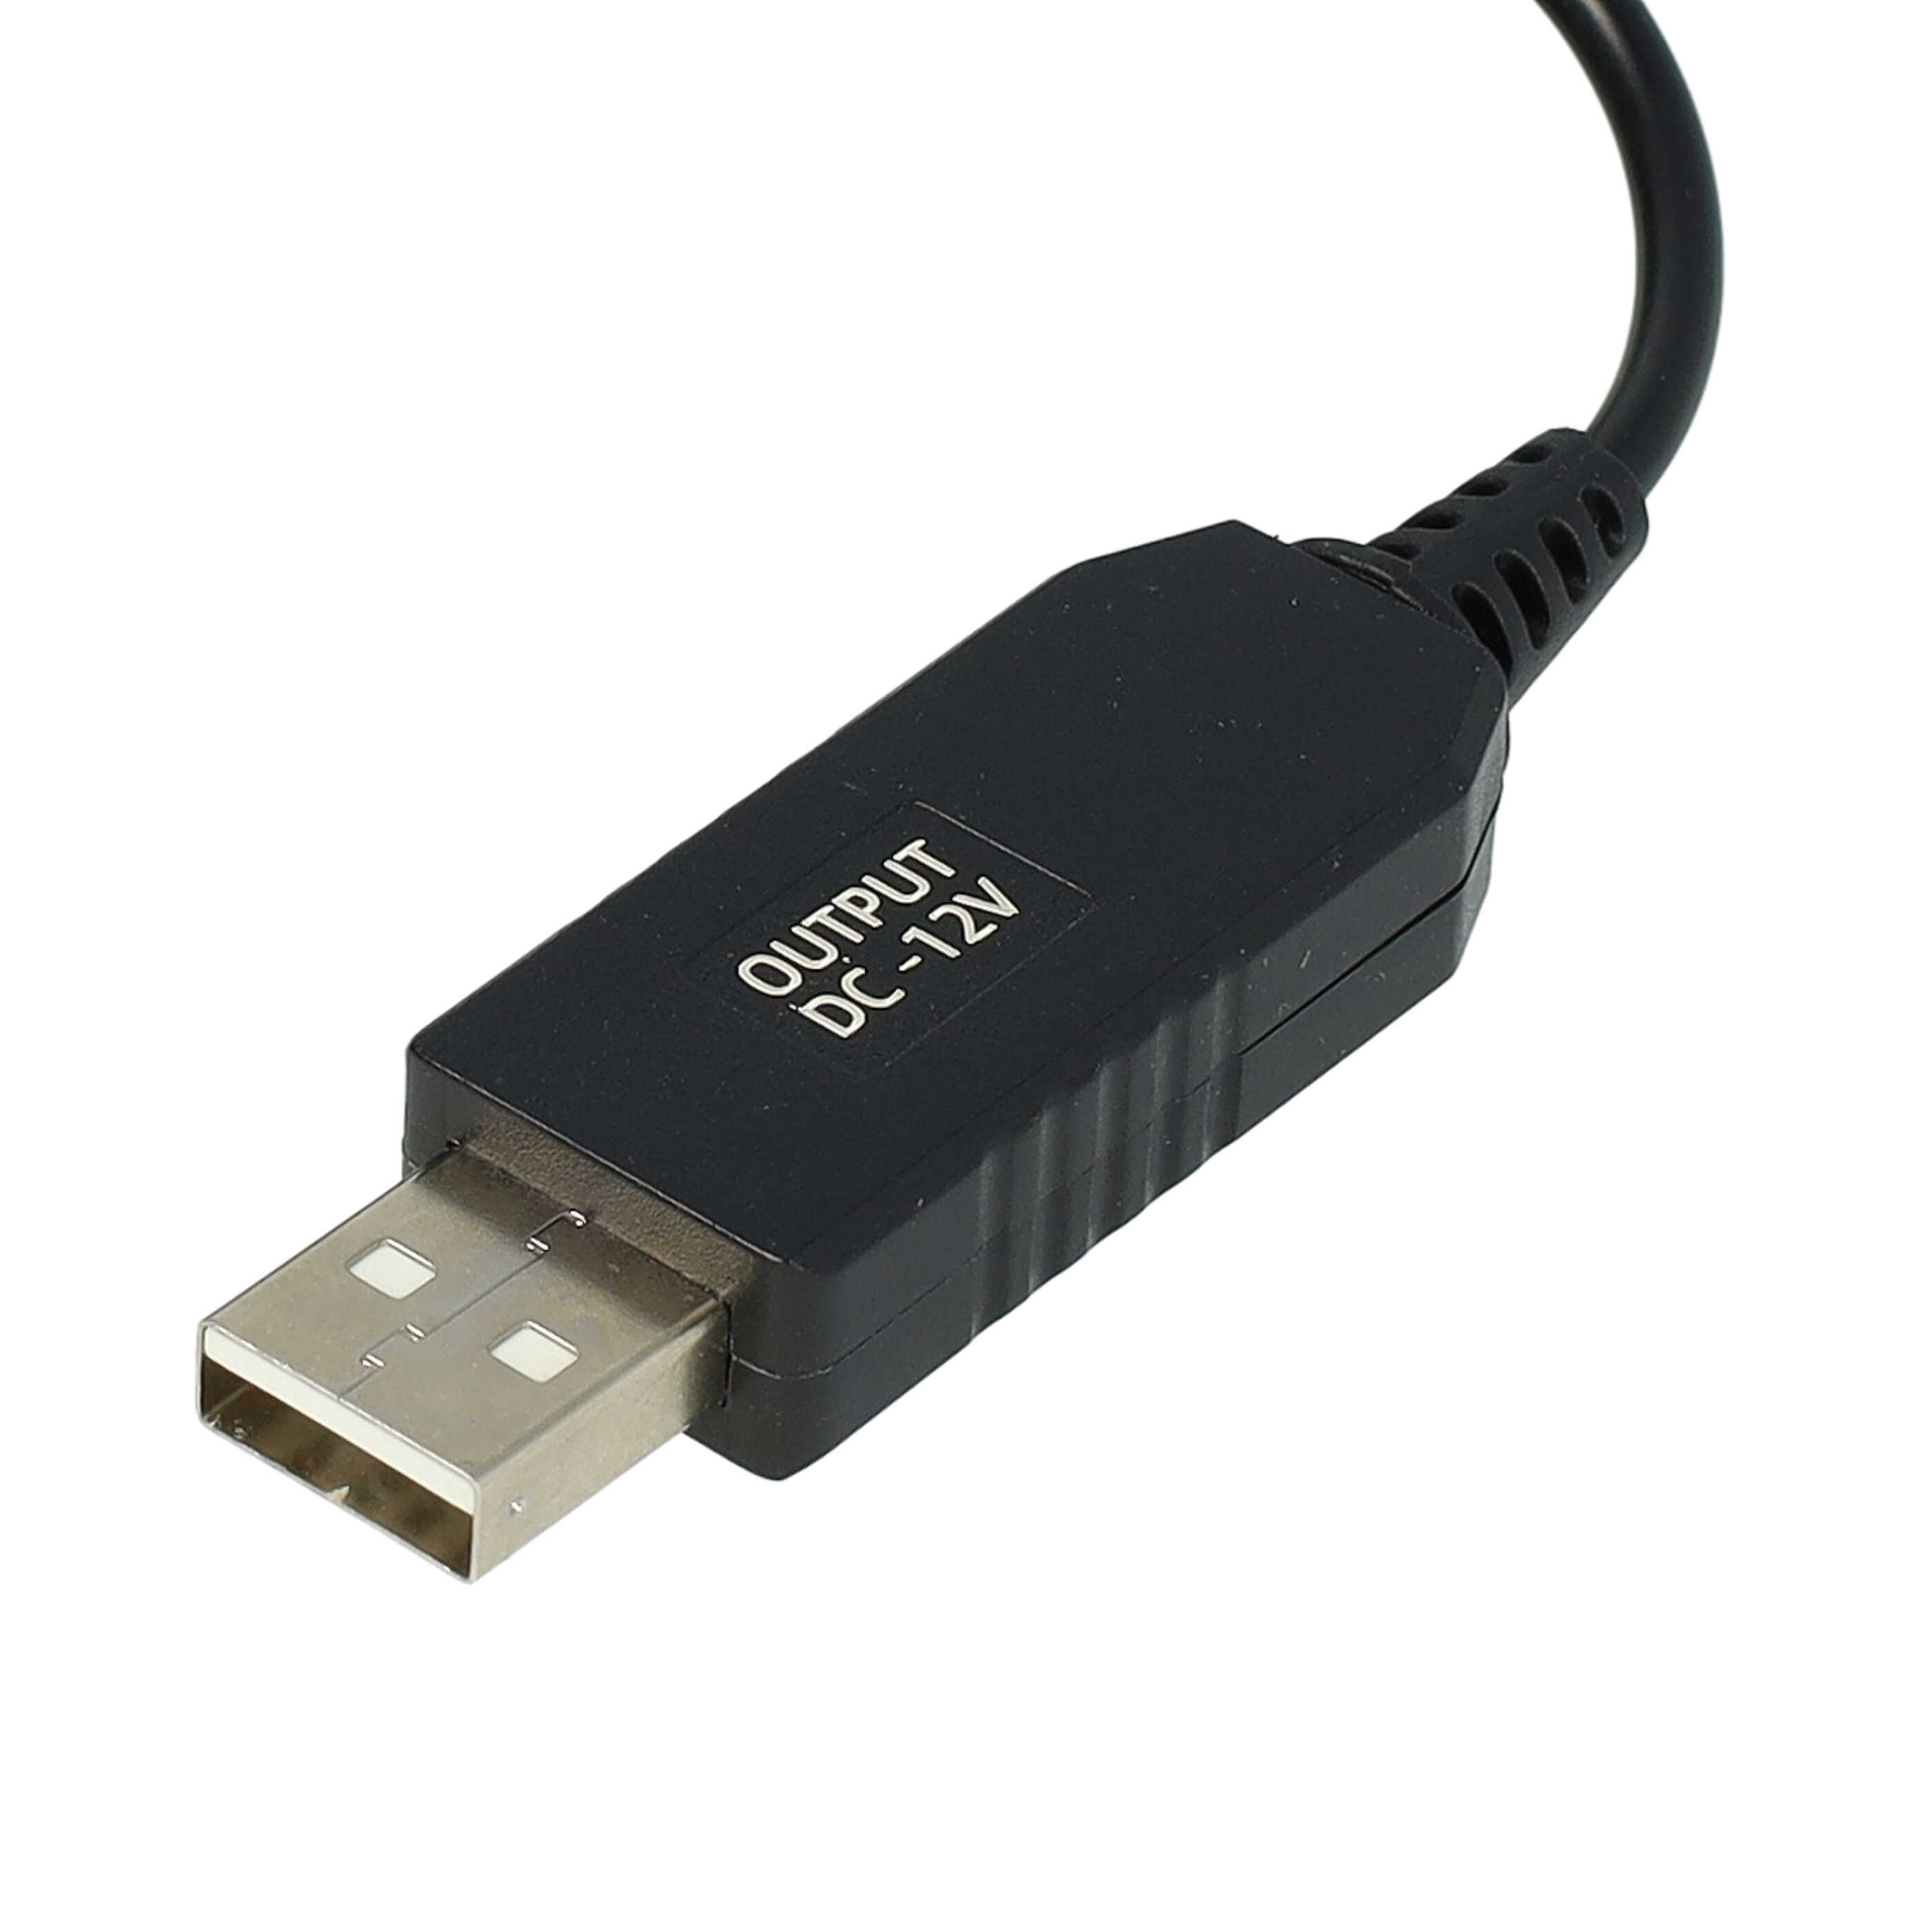 Caricabatterie USB per rasoio, epilatore, spazzolino Braun, Oral-B HC20 - 120 cm